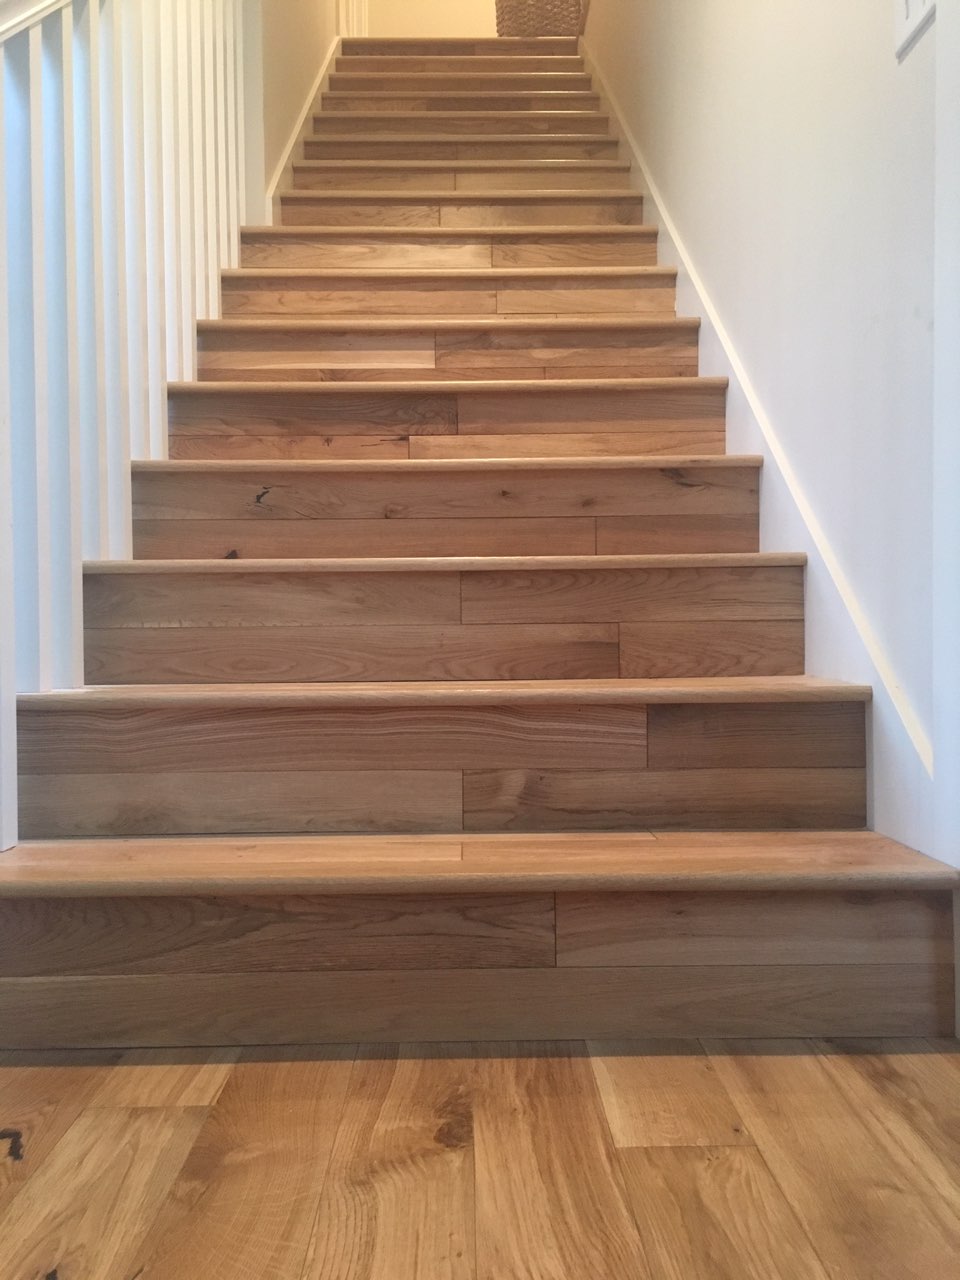 bounds-flooring-wood-flooring-stairs1